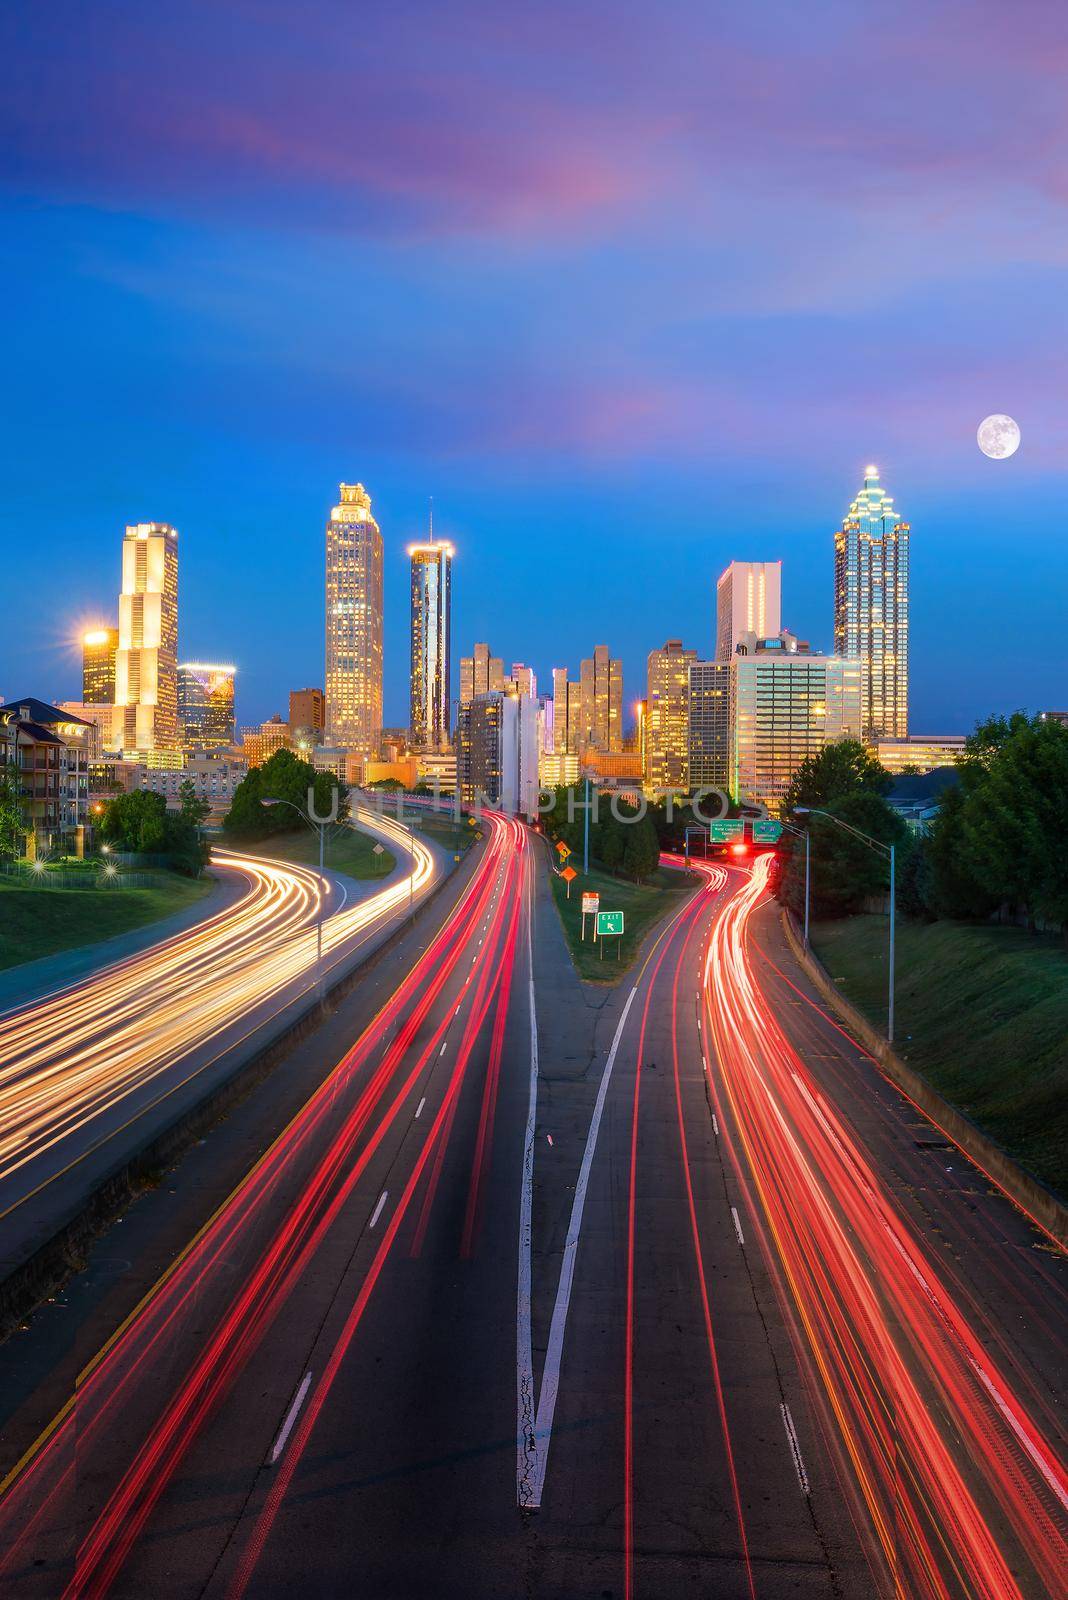 Skyline of Atlanta city by f11photo